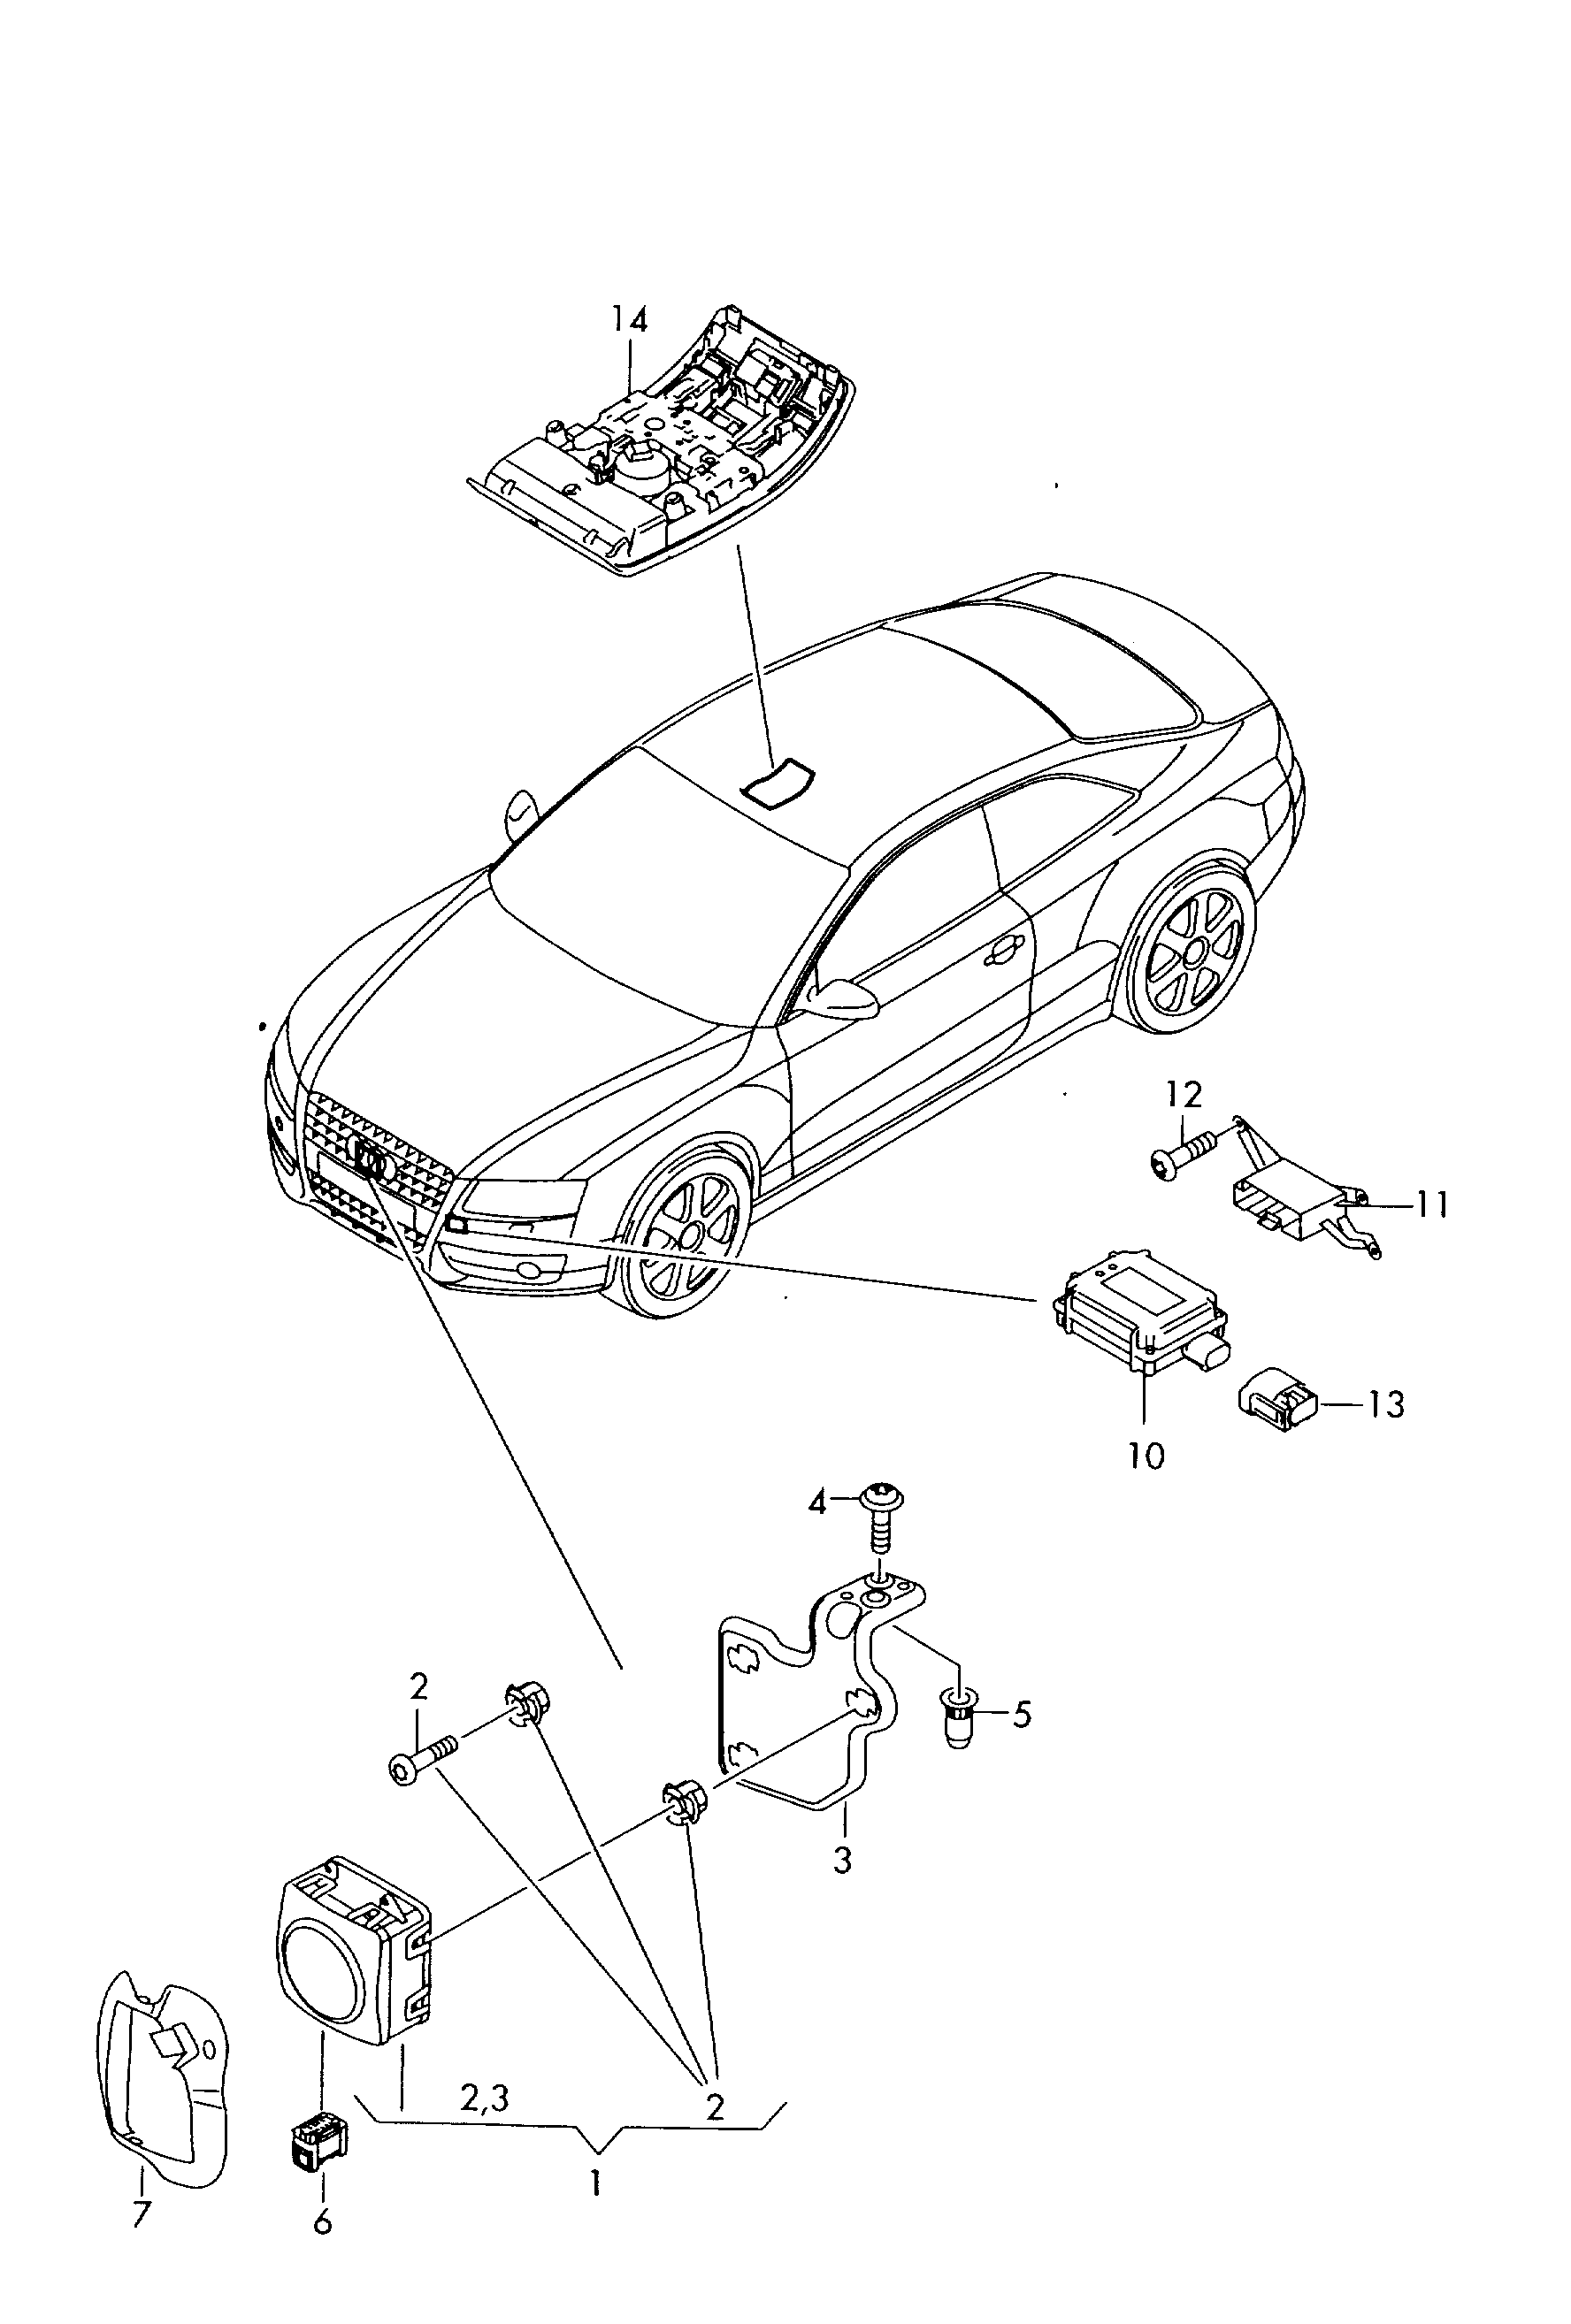 centralina per
apriporta garage - Audi Q5(AQ5)  